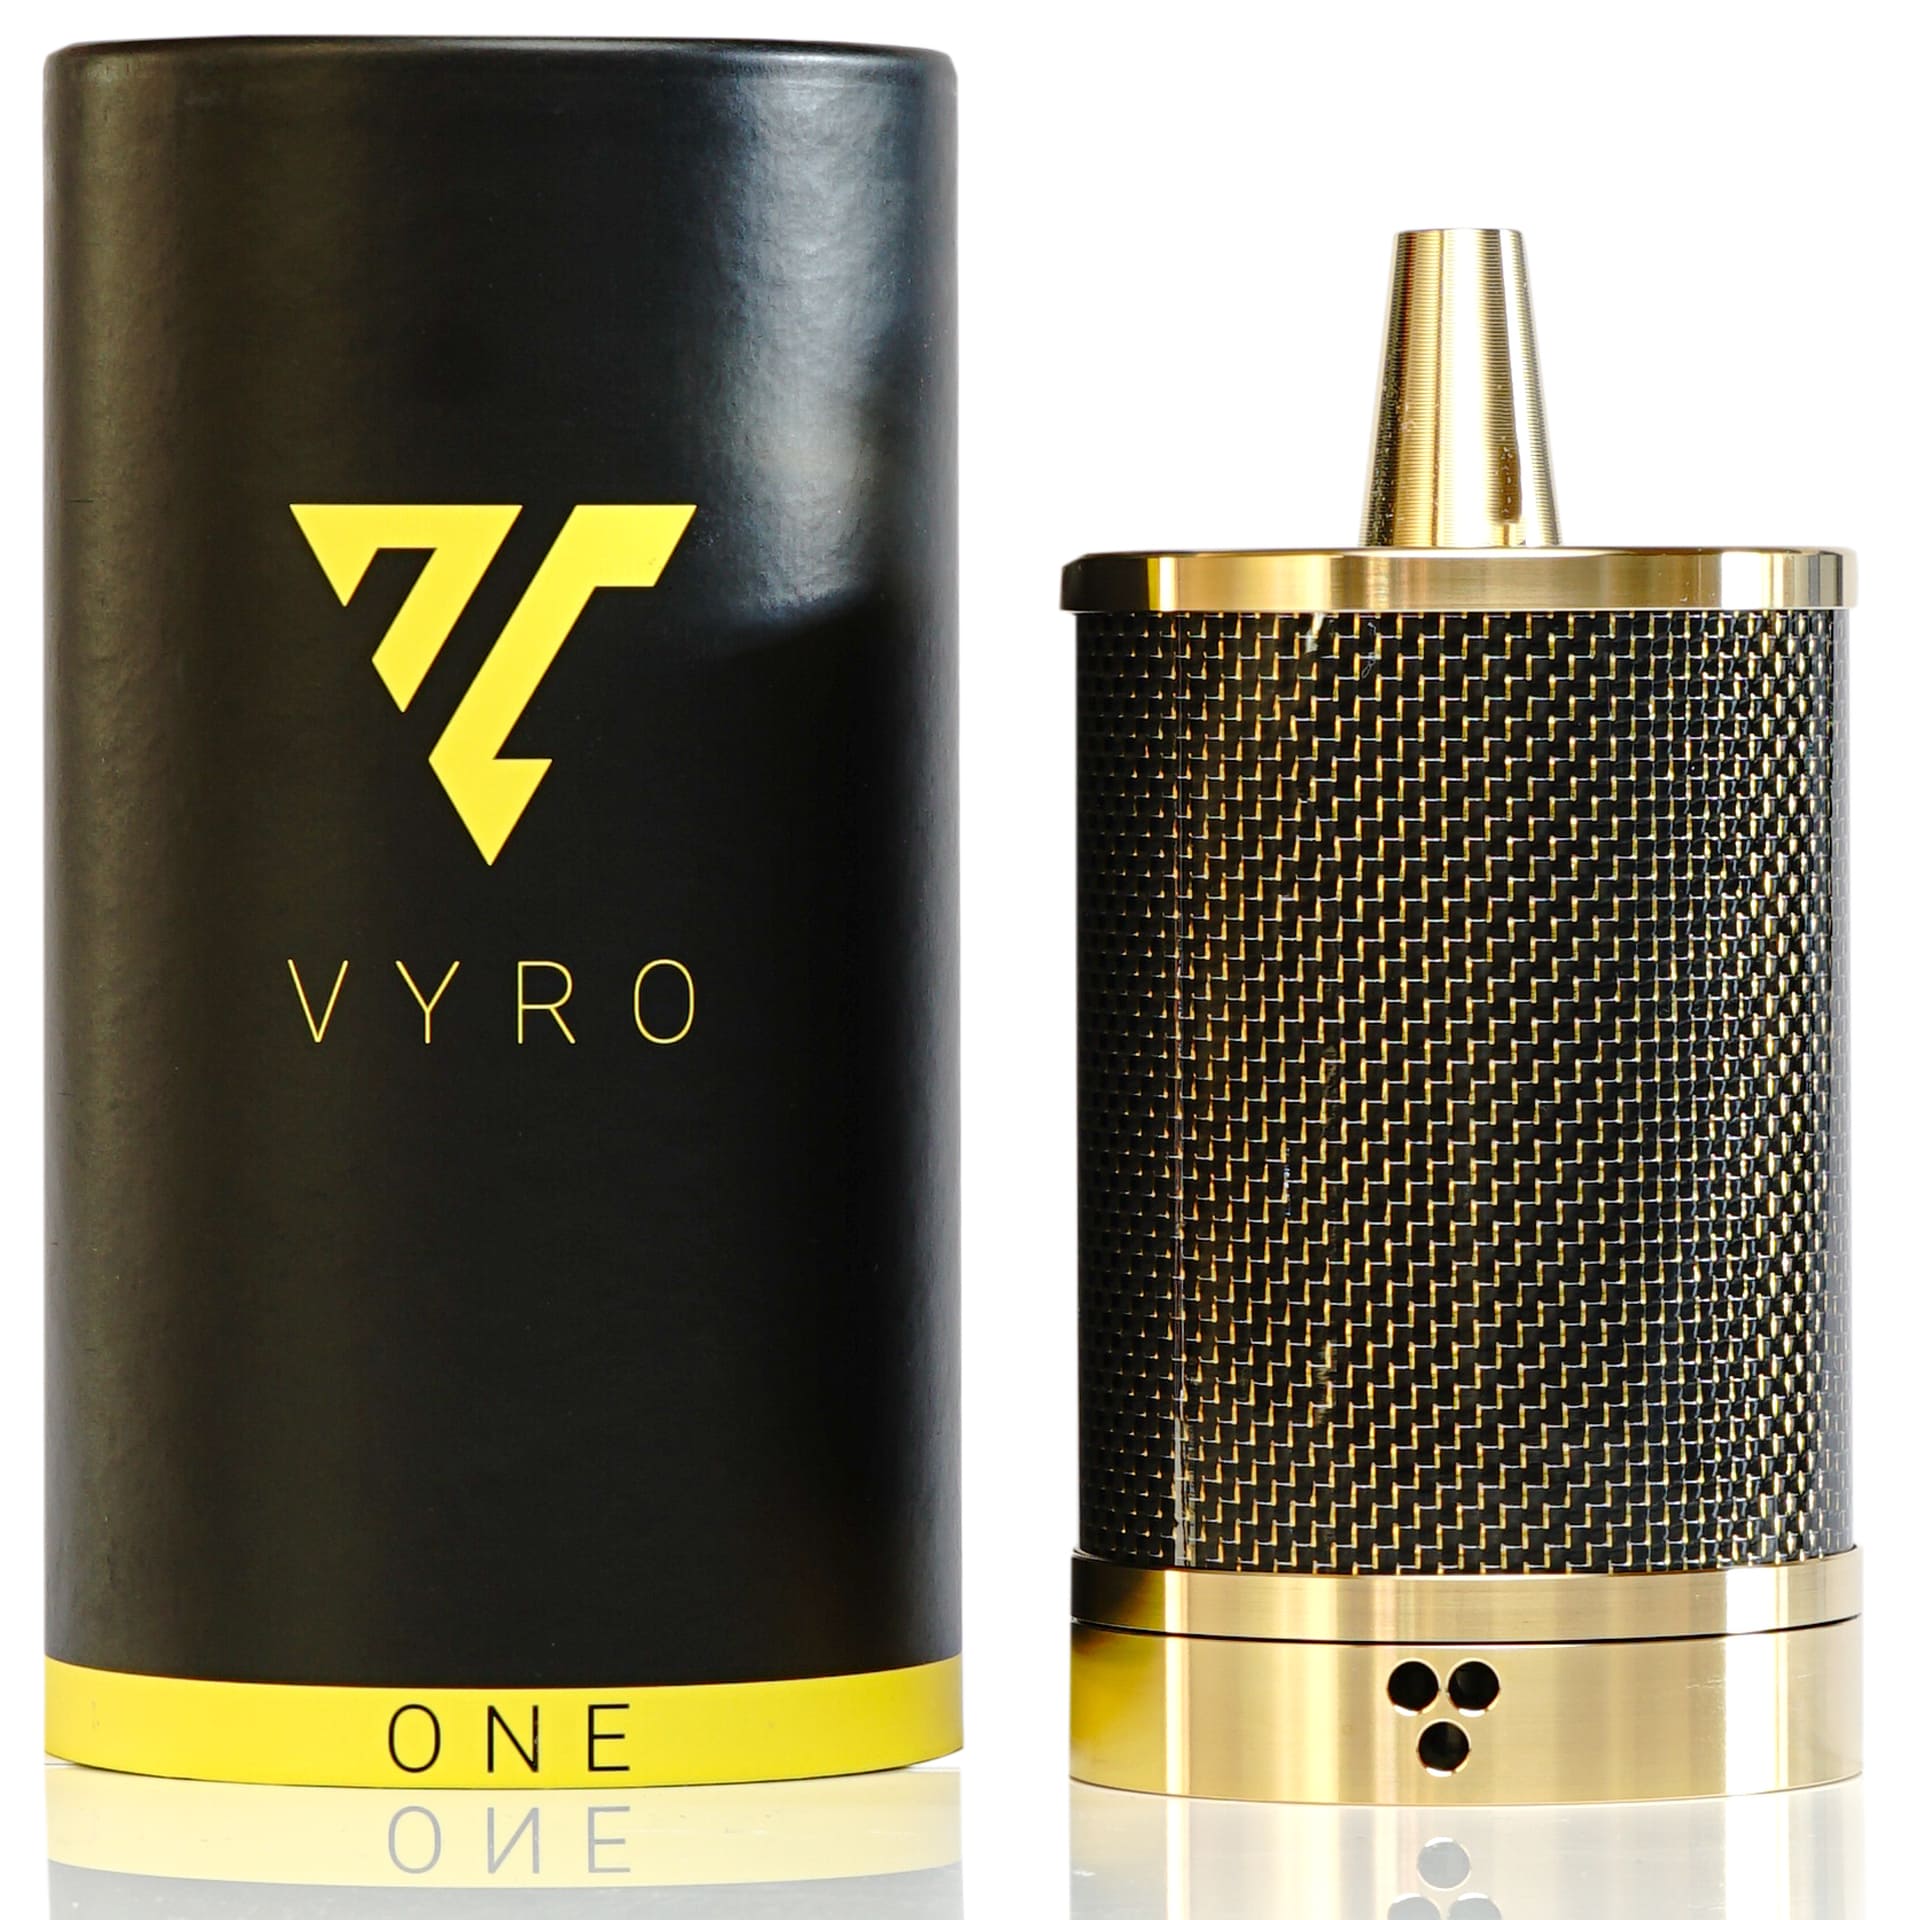 Vyro One / Carbon Gold / 24 Karat Gold